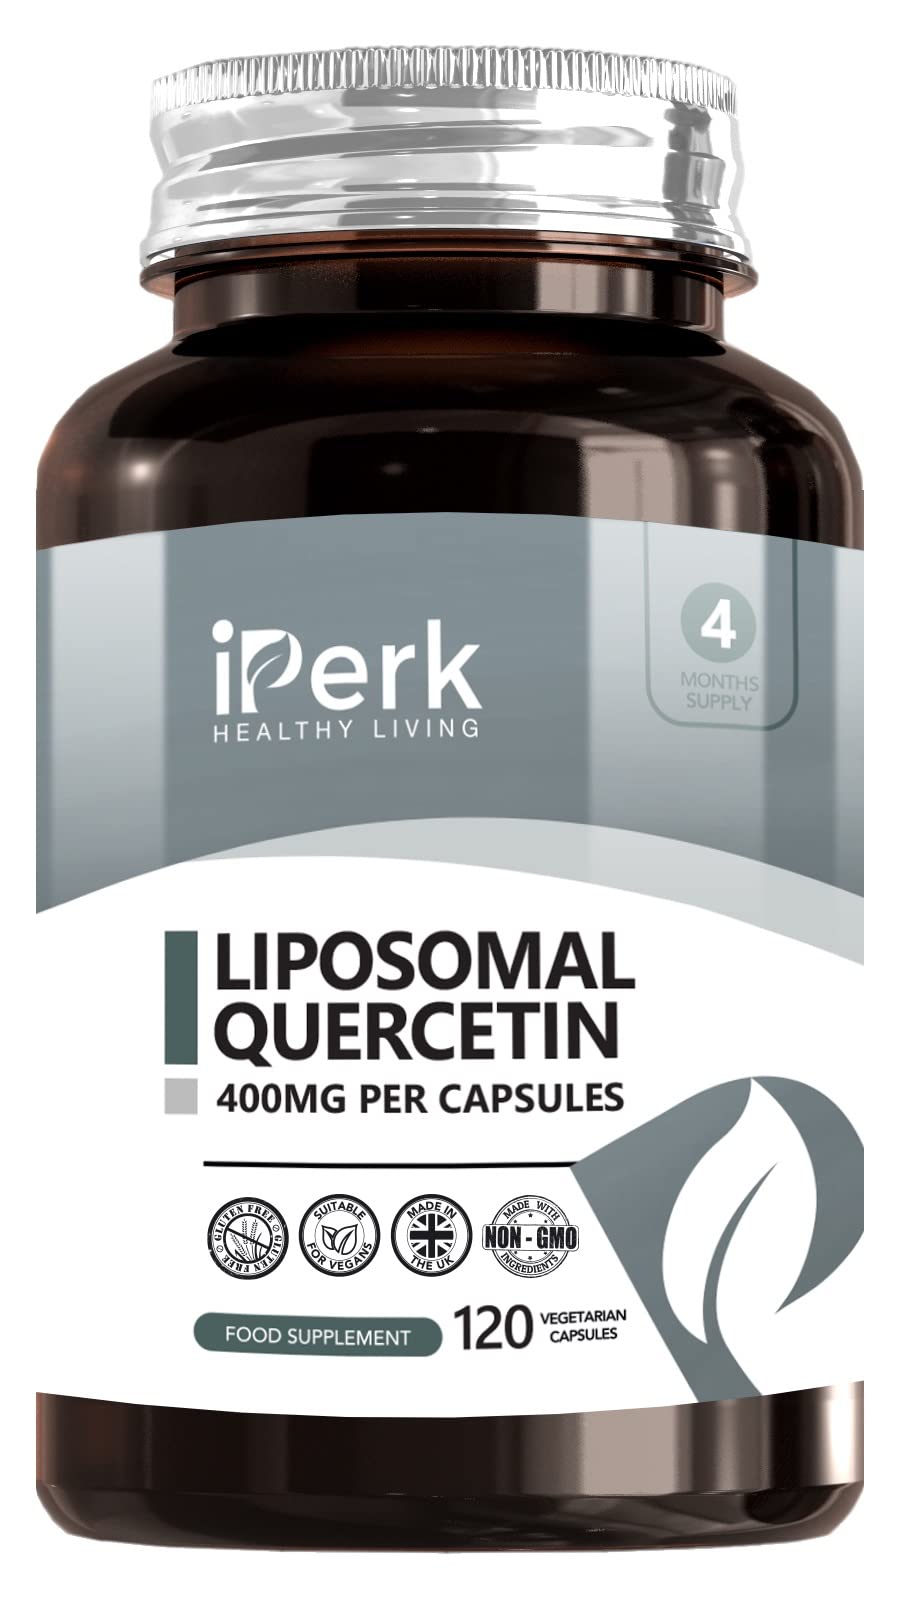 [Australia] - iperk Liposomal Quercetin Supplement 400mg | 120 High Strength Vegetarian Capsules | Non-GMO & Gluten-Free | 4 Months Supply 